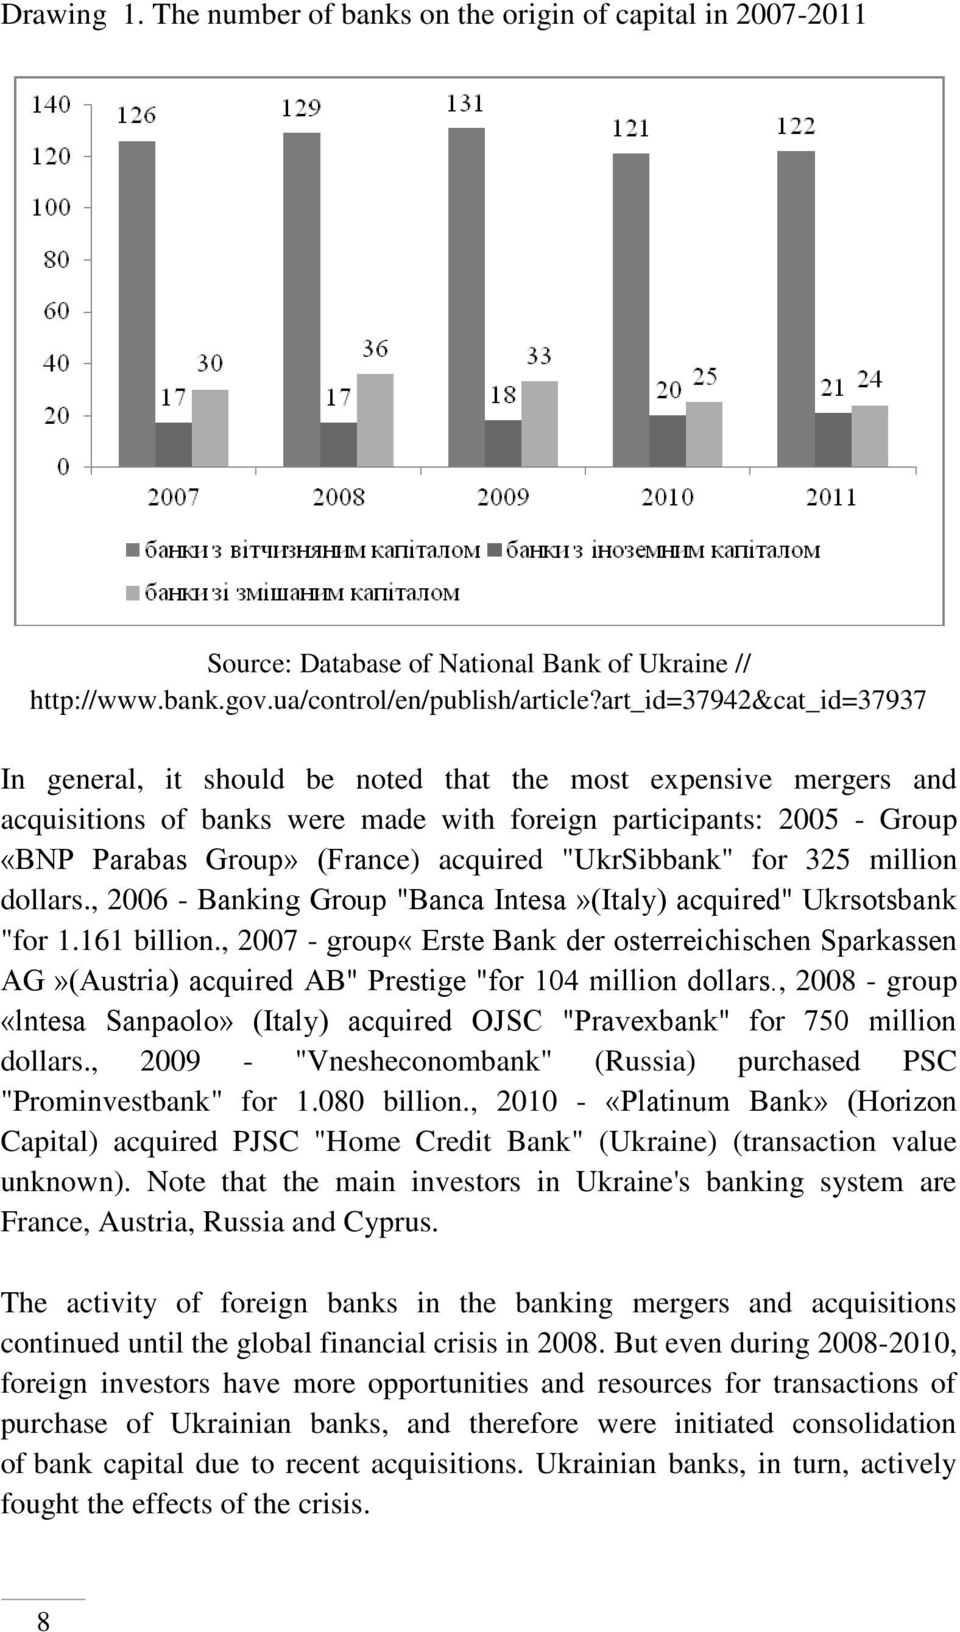 acquired "UkrSibbank" for 325 million dollars., 2006 - Banking Group "Banca Intesa»(Italy) acquired" Ukrsotsbank "for 1.161 billion.